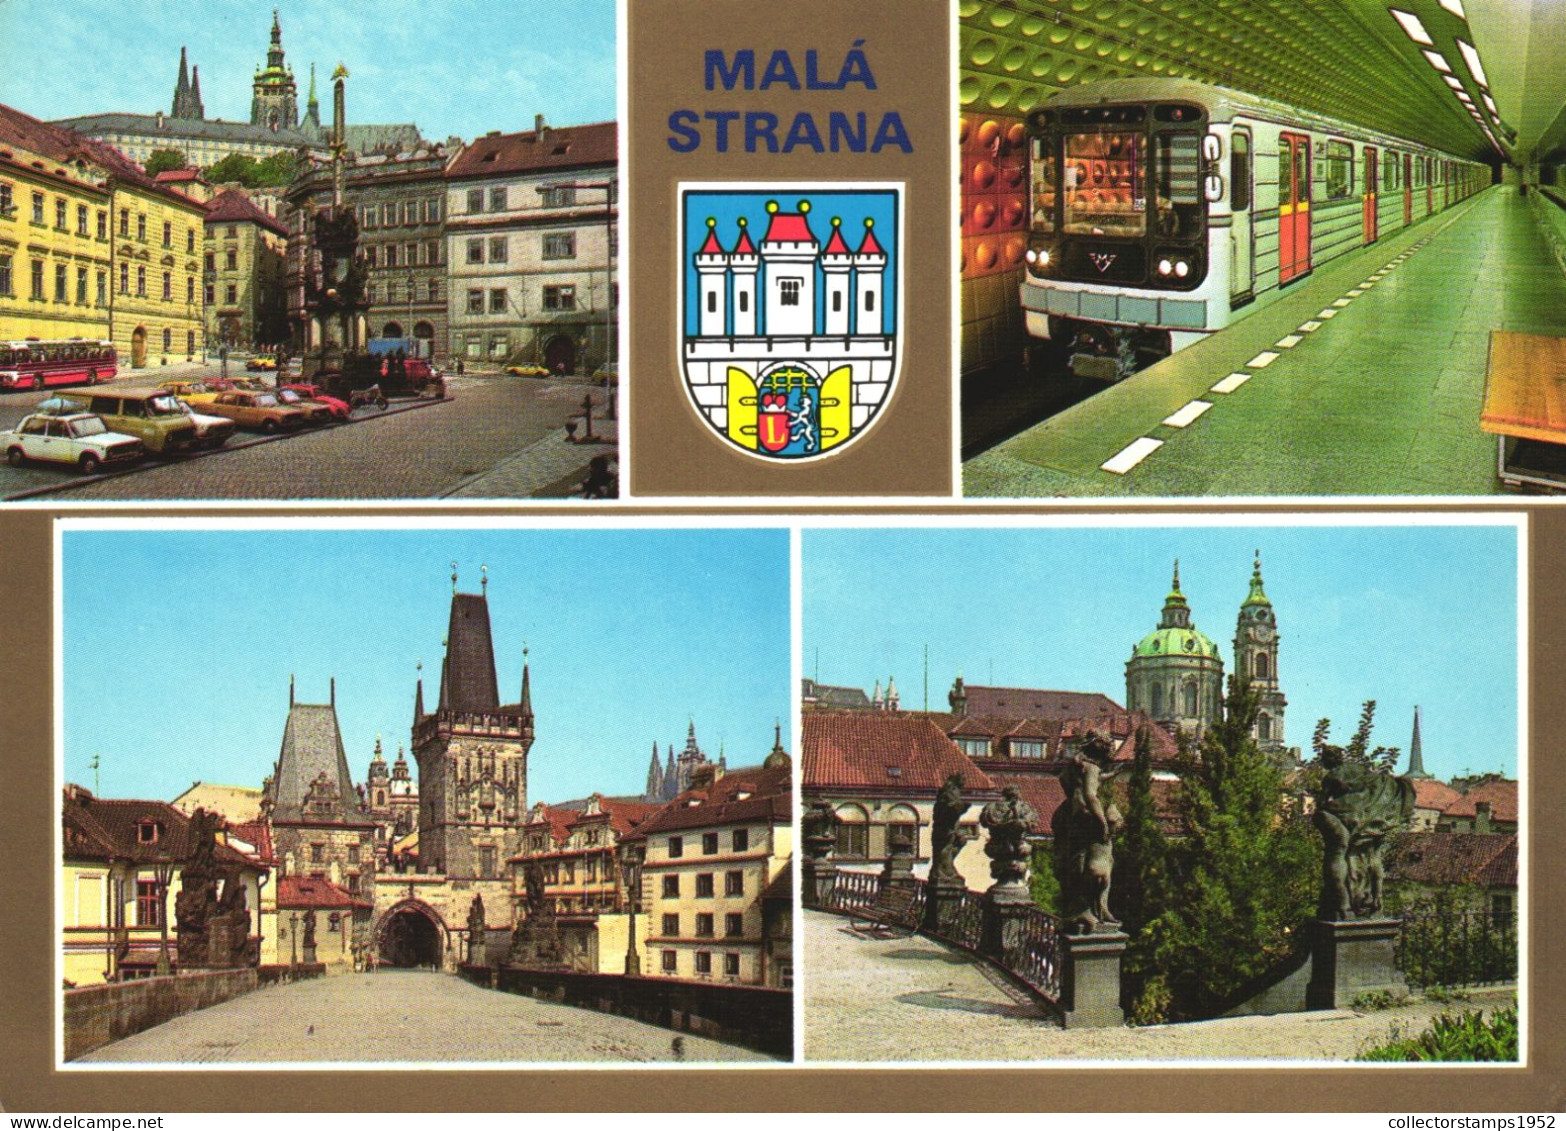 PRAGUE, MALA STRANA, ARCHITECTURE, CARS, EMBLEM, GATE, MULTIPLE VIEWS, STATUE, TOWER, METRO,BUS,CZECH REPUBLIC, POSTCARD - Tschechische Republik